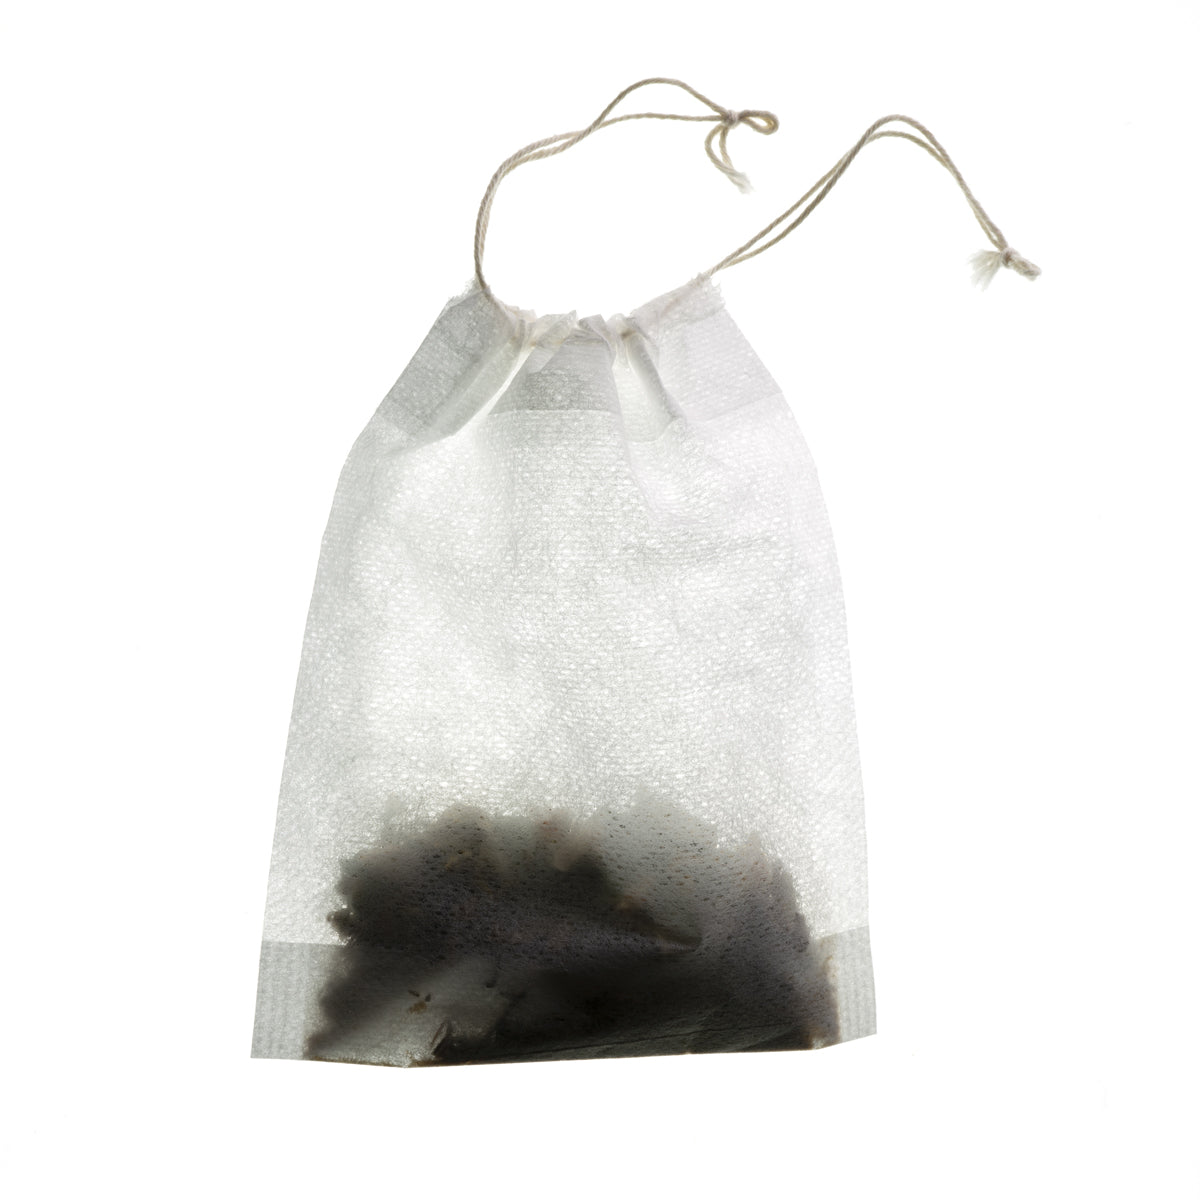 Single tea bag of PUSH 5PM tea by noosha